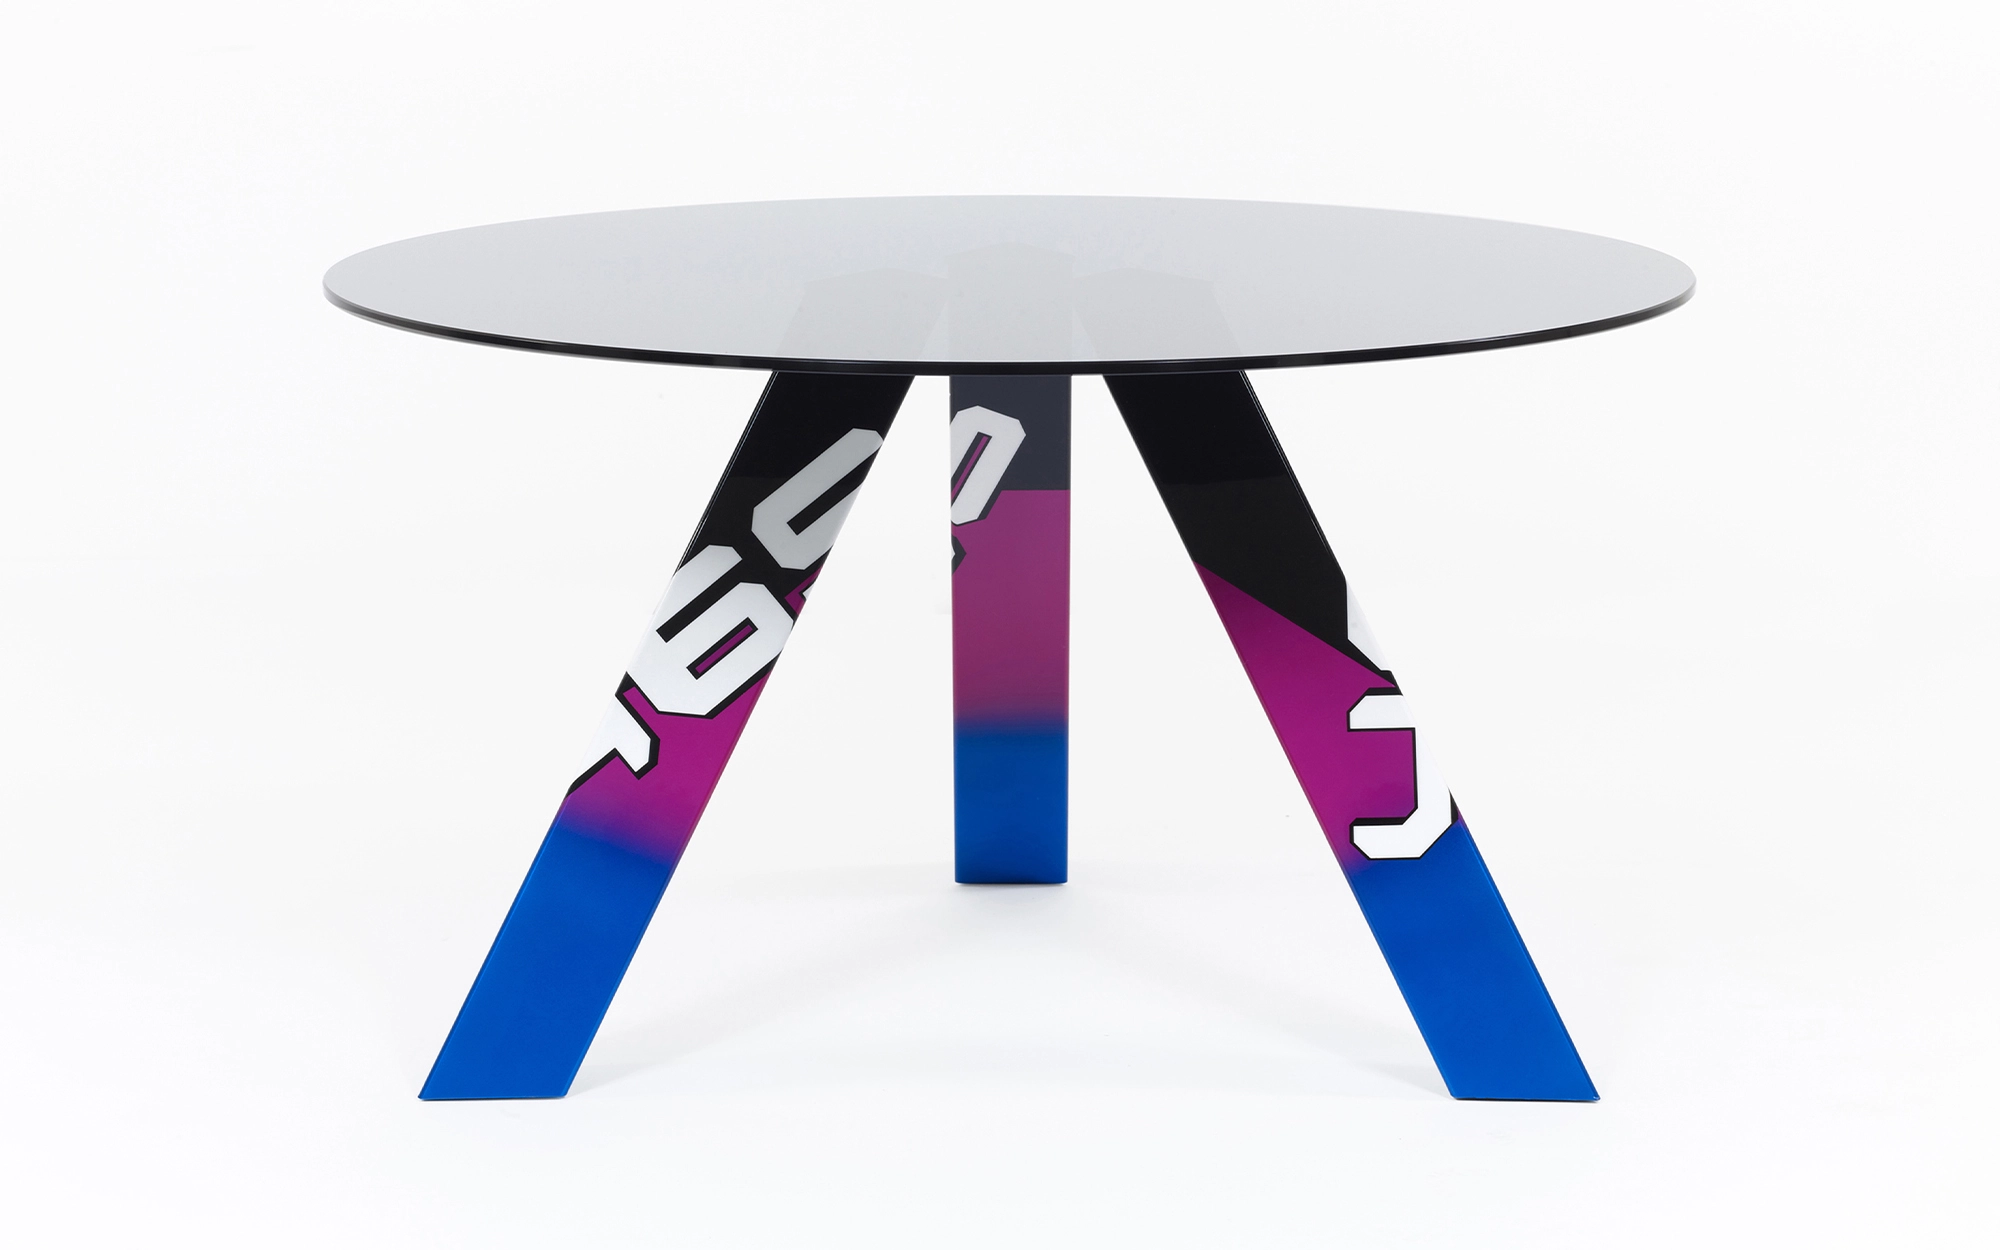 465 Table - Konstantin Grcic - table - Galerie kreo